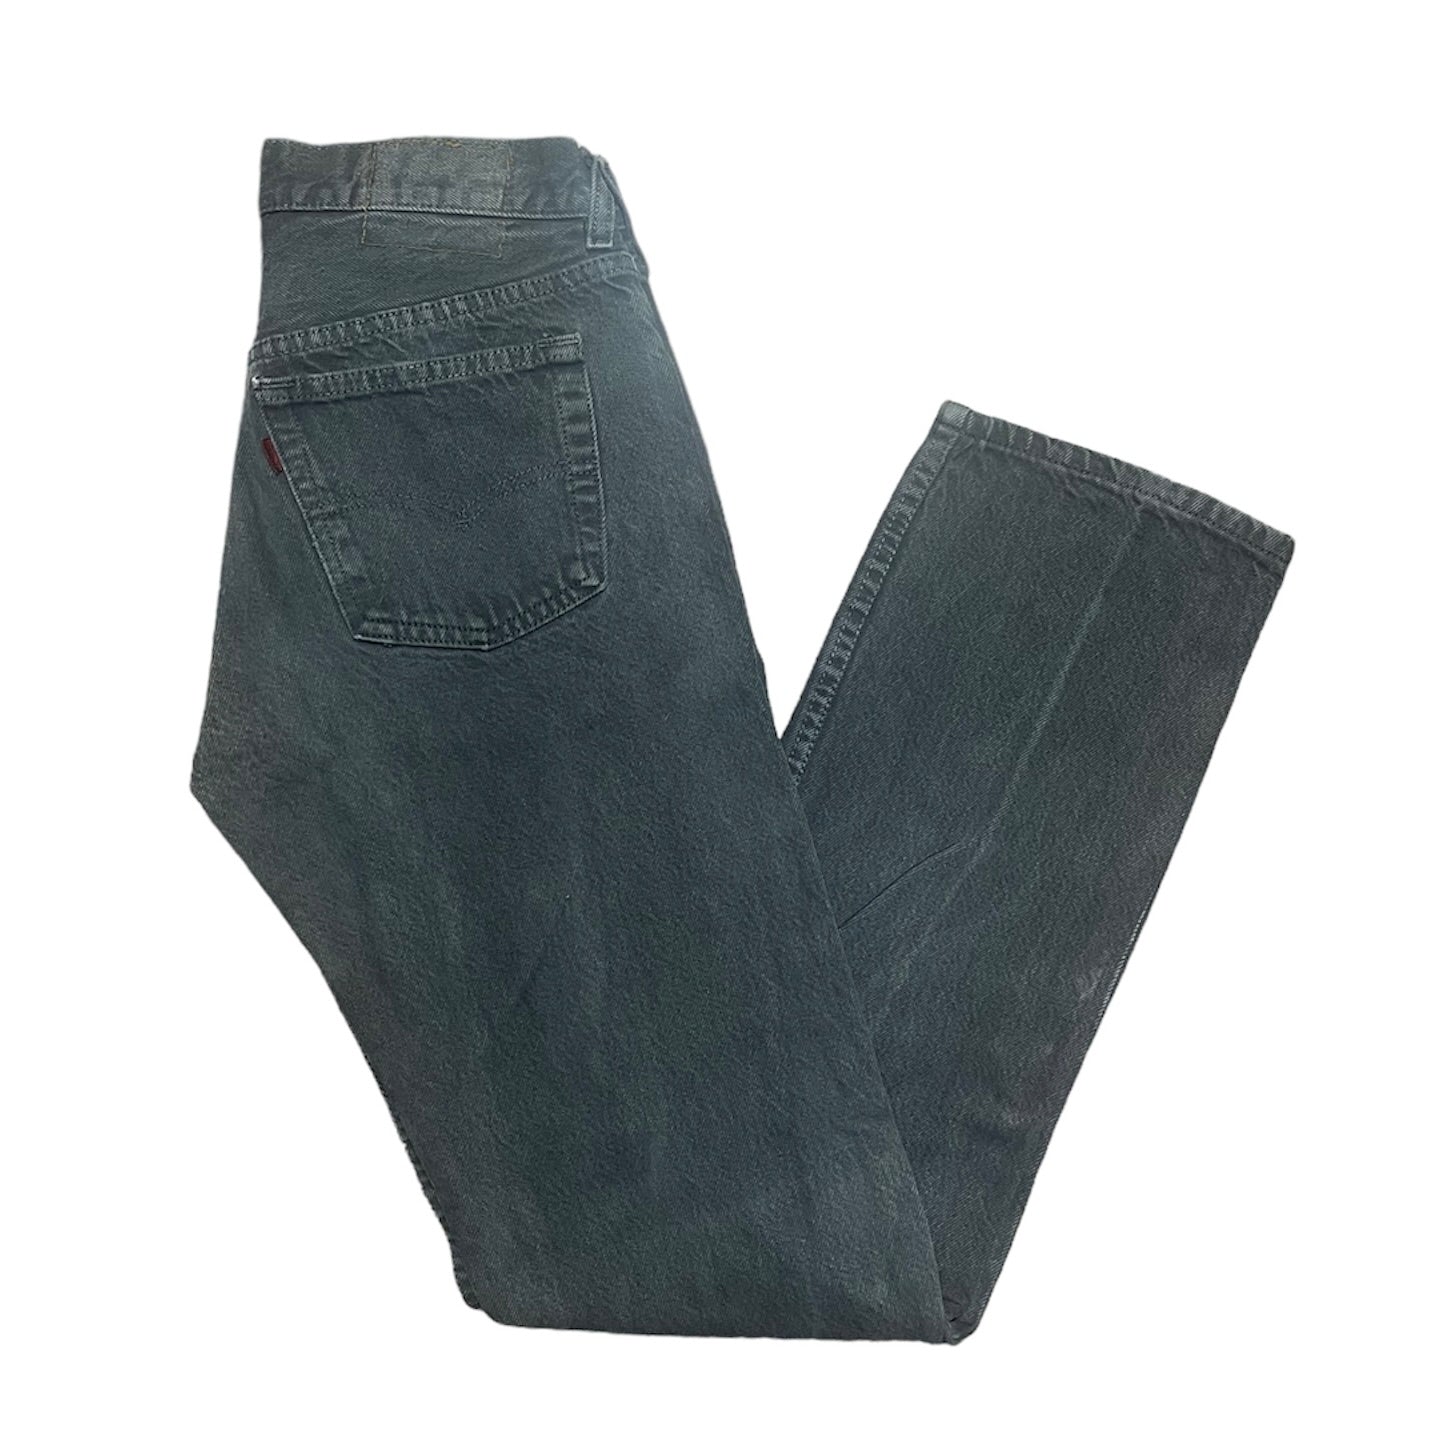 Vintage Levis Black/Grey Jeans (W28)